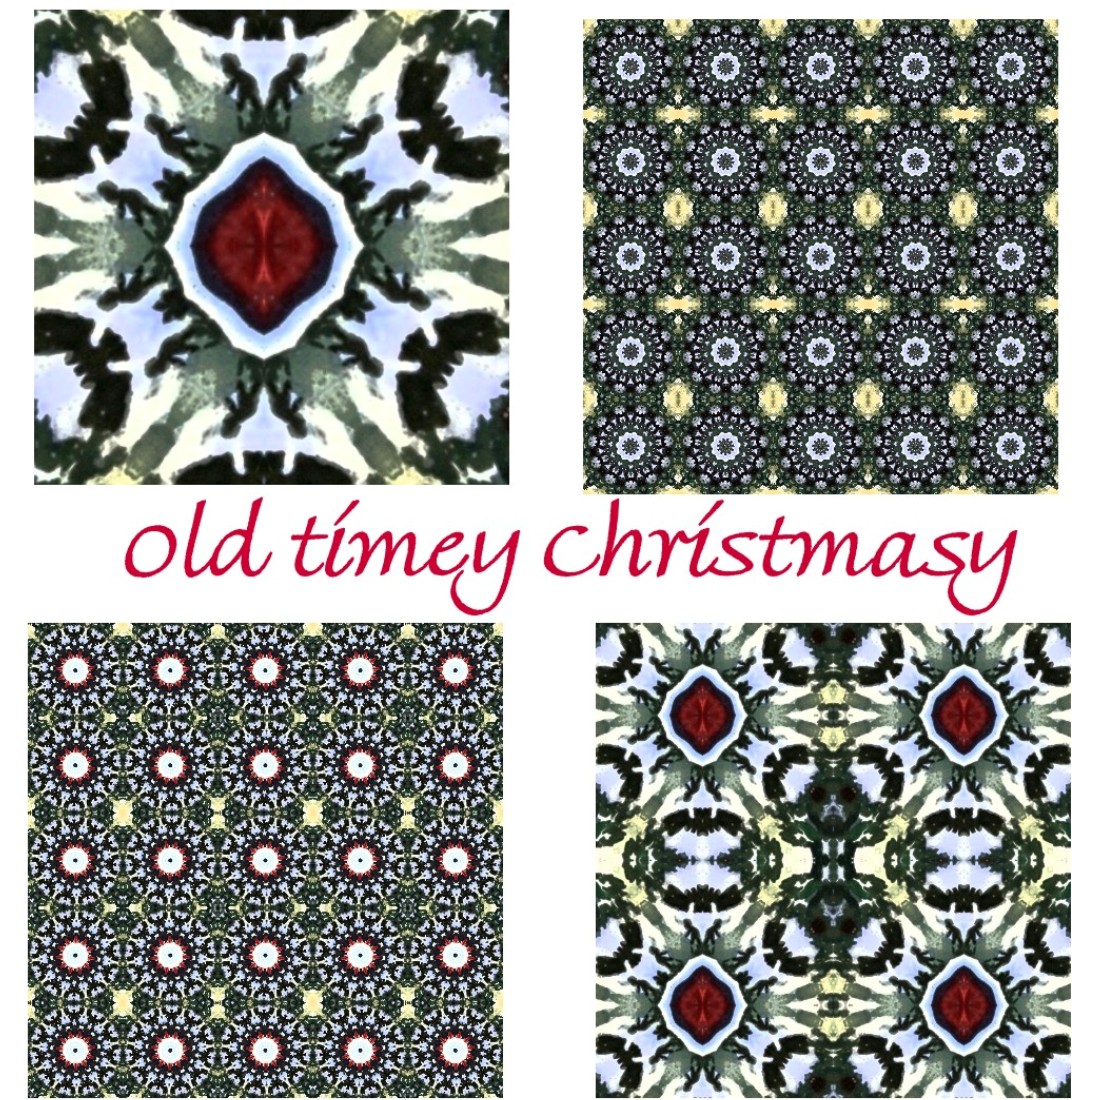 Christmas Old Timey Digital Paper Design cover image.